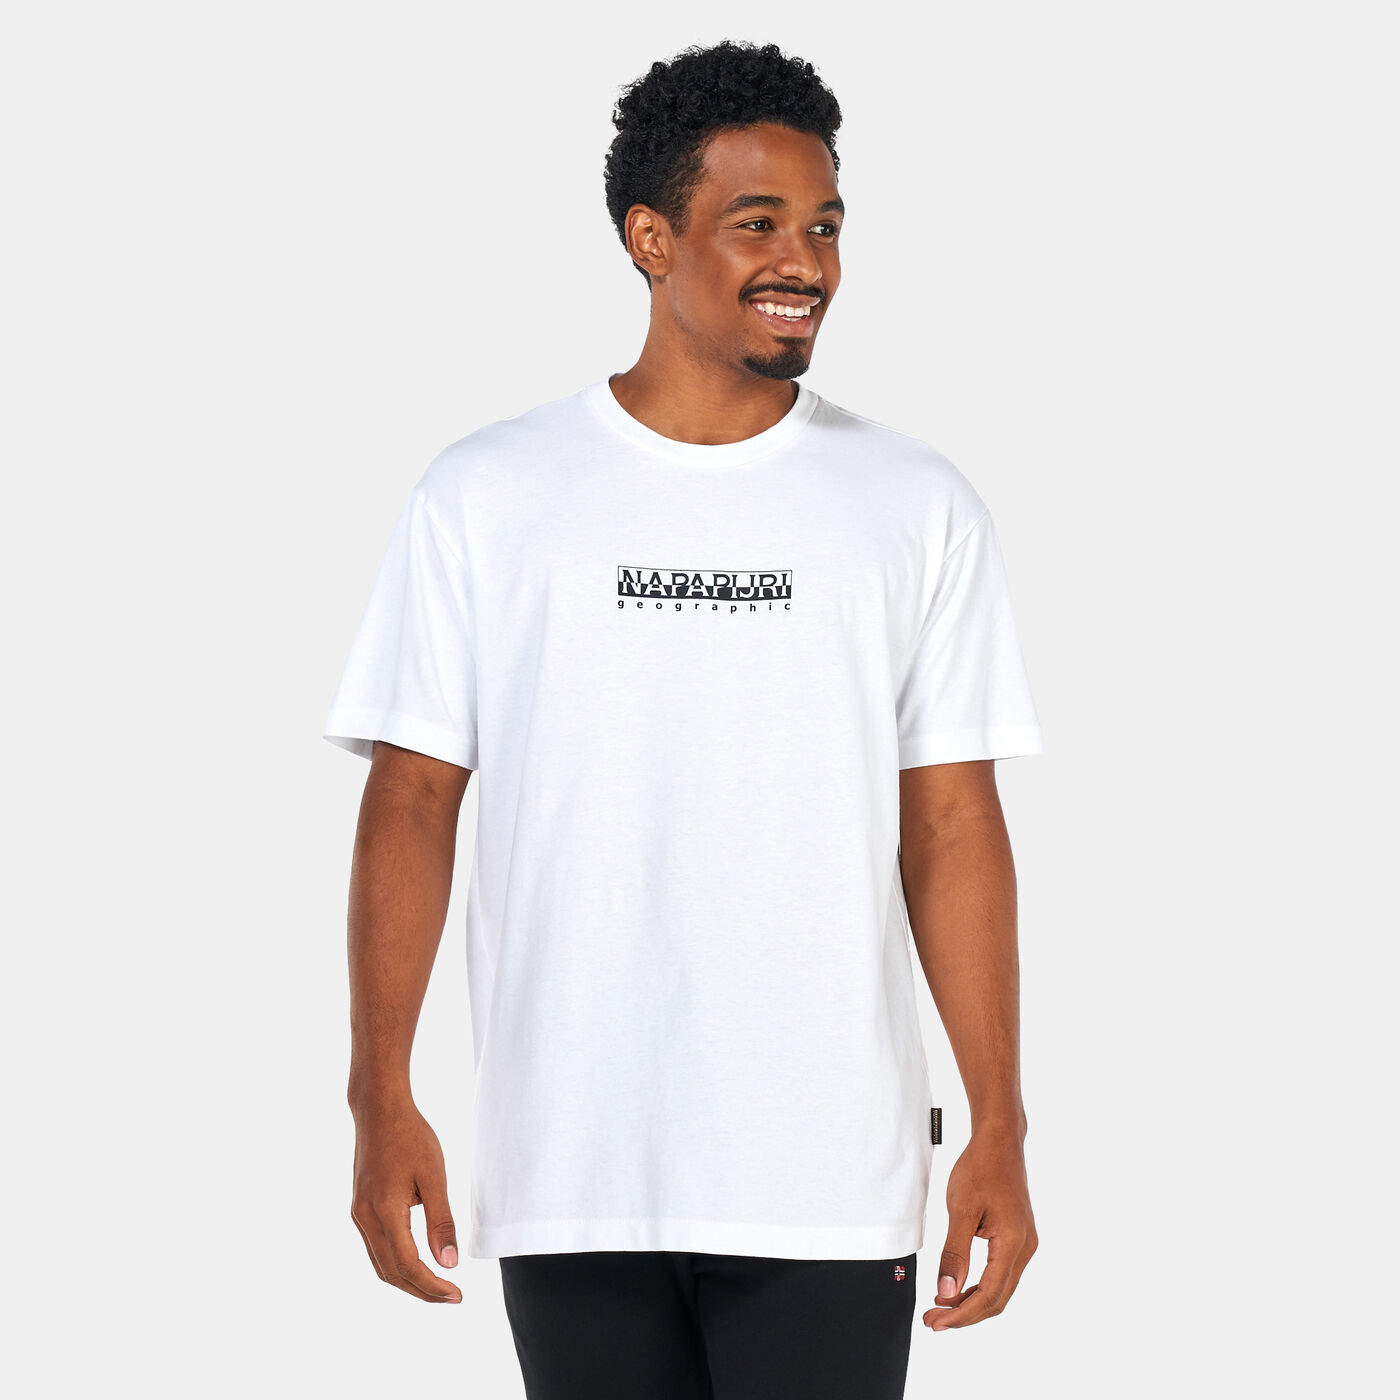 Men's S-Box 3 T-Shirt